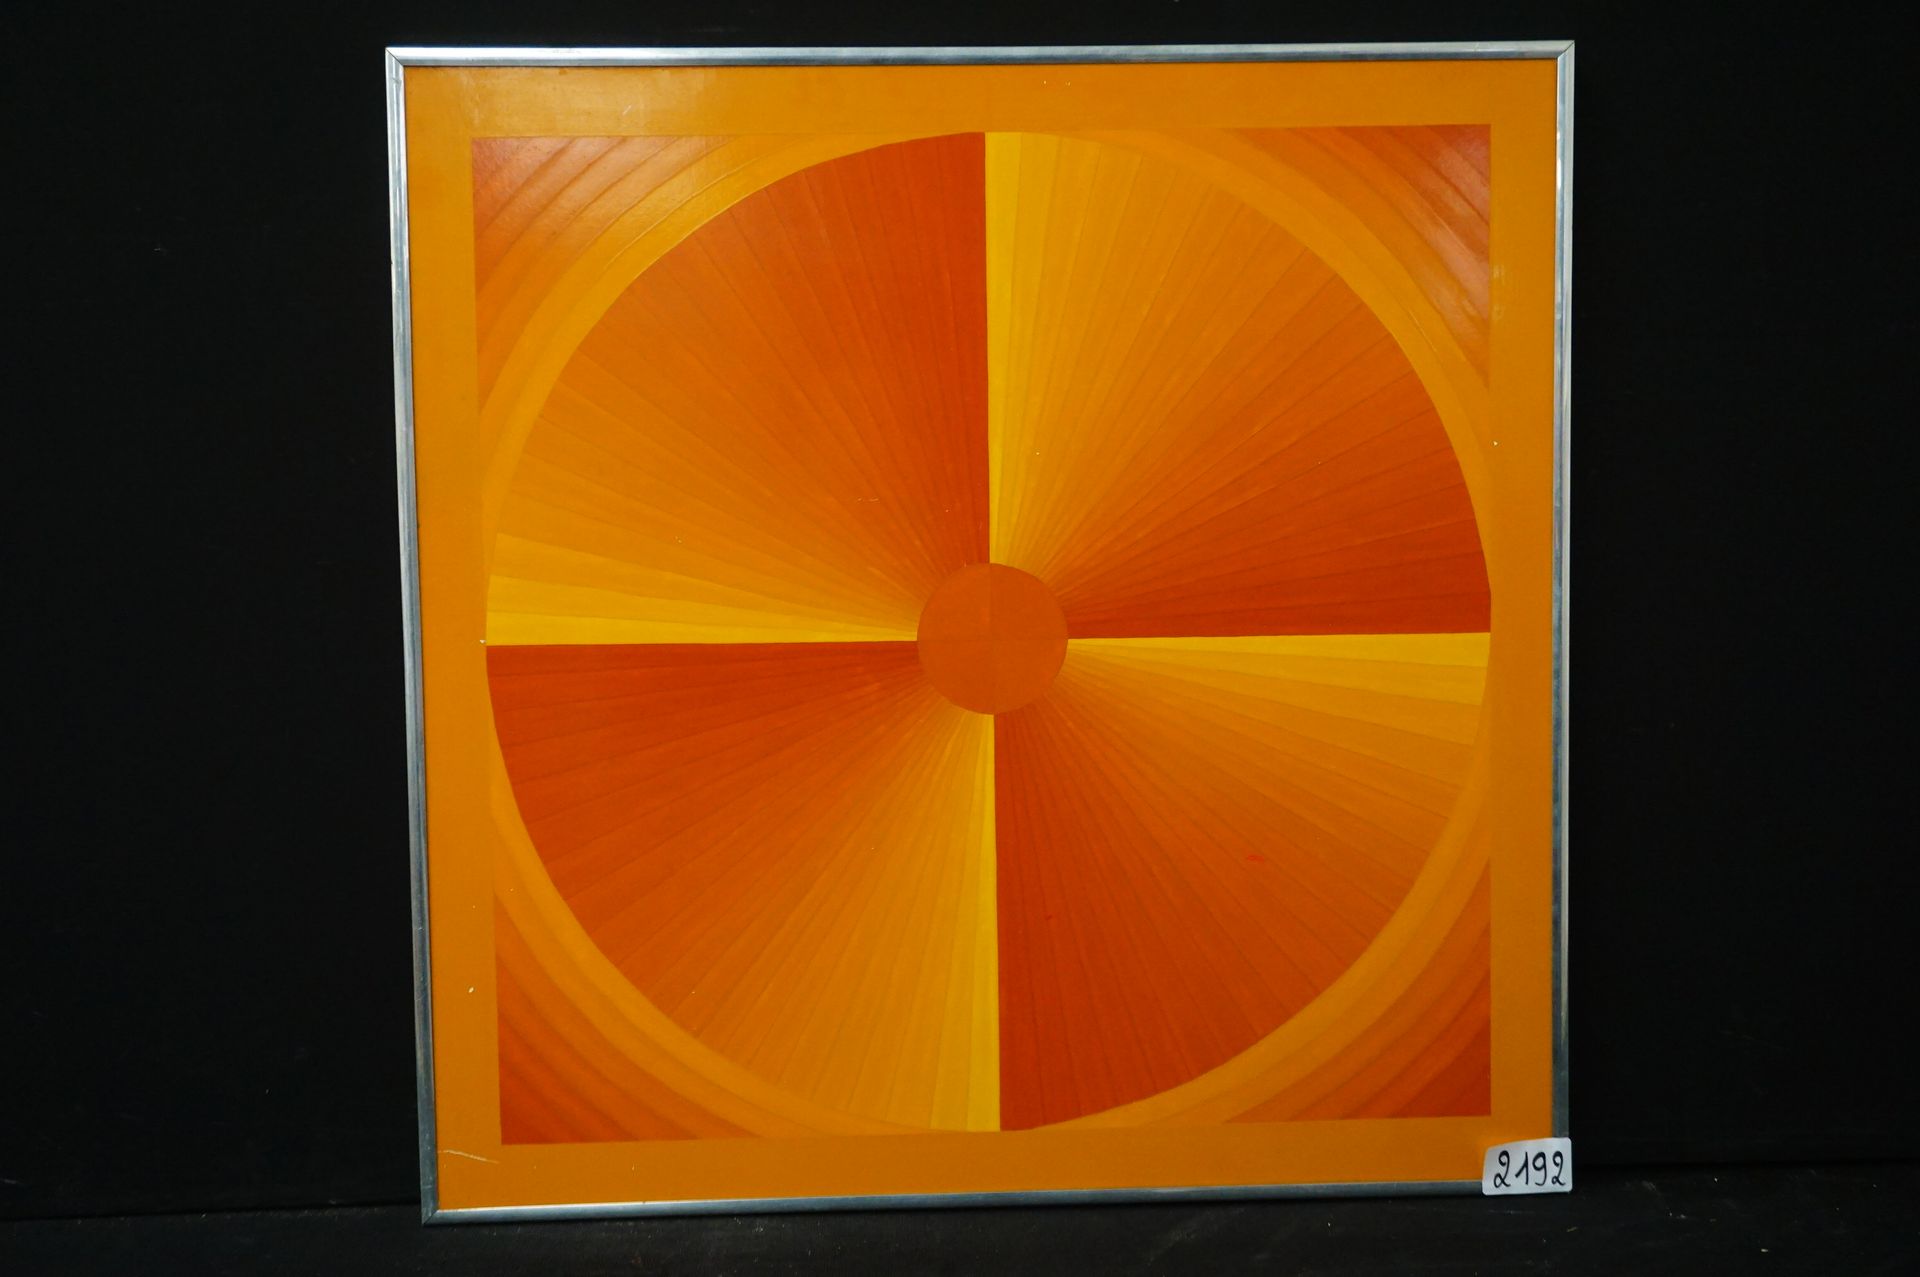 BERNARD VERHEYEN "作为生命力的太阳"--面板上的油画--签名并注明日期 1973年--80 x 80厘米